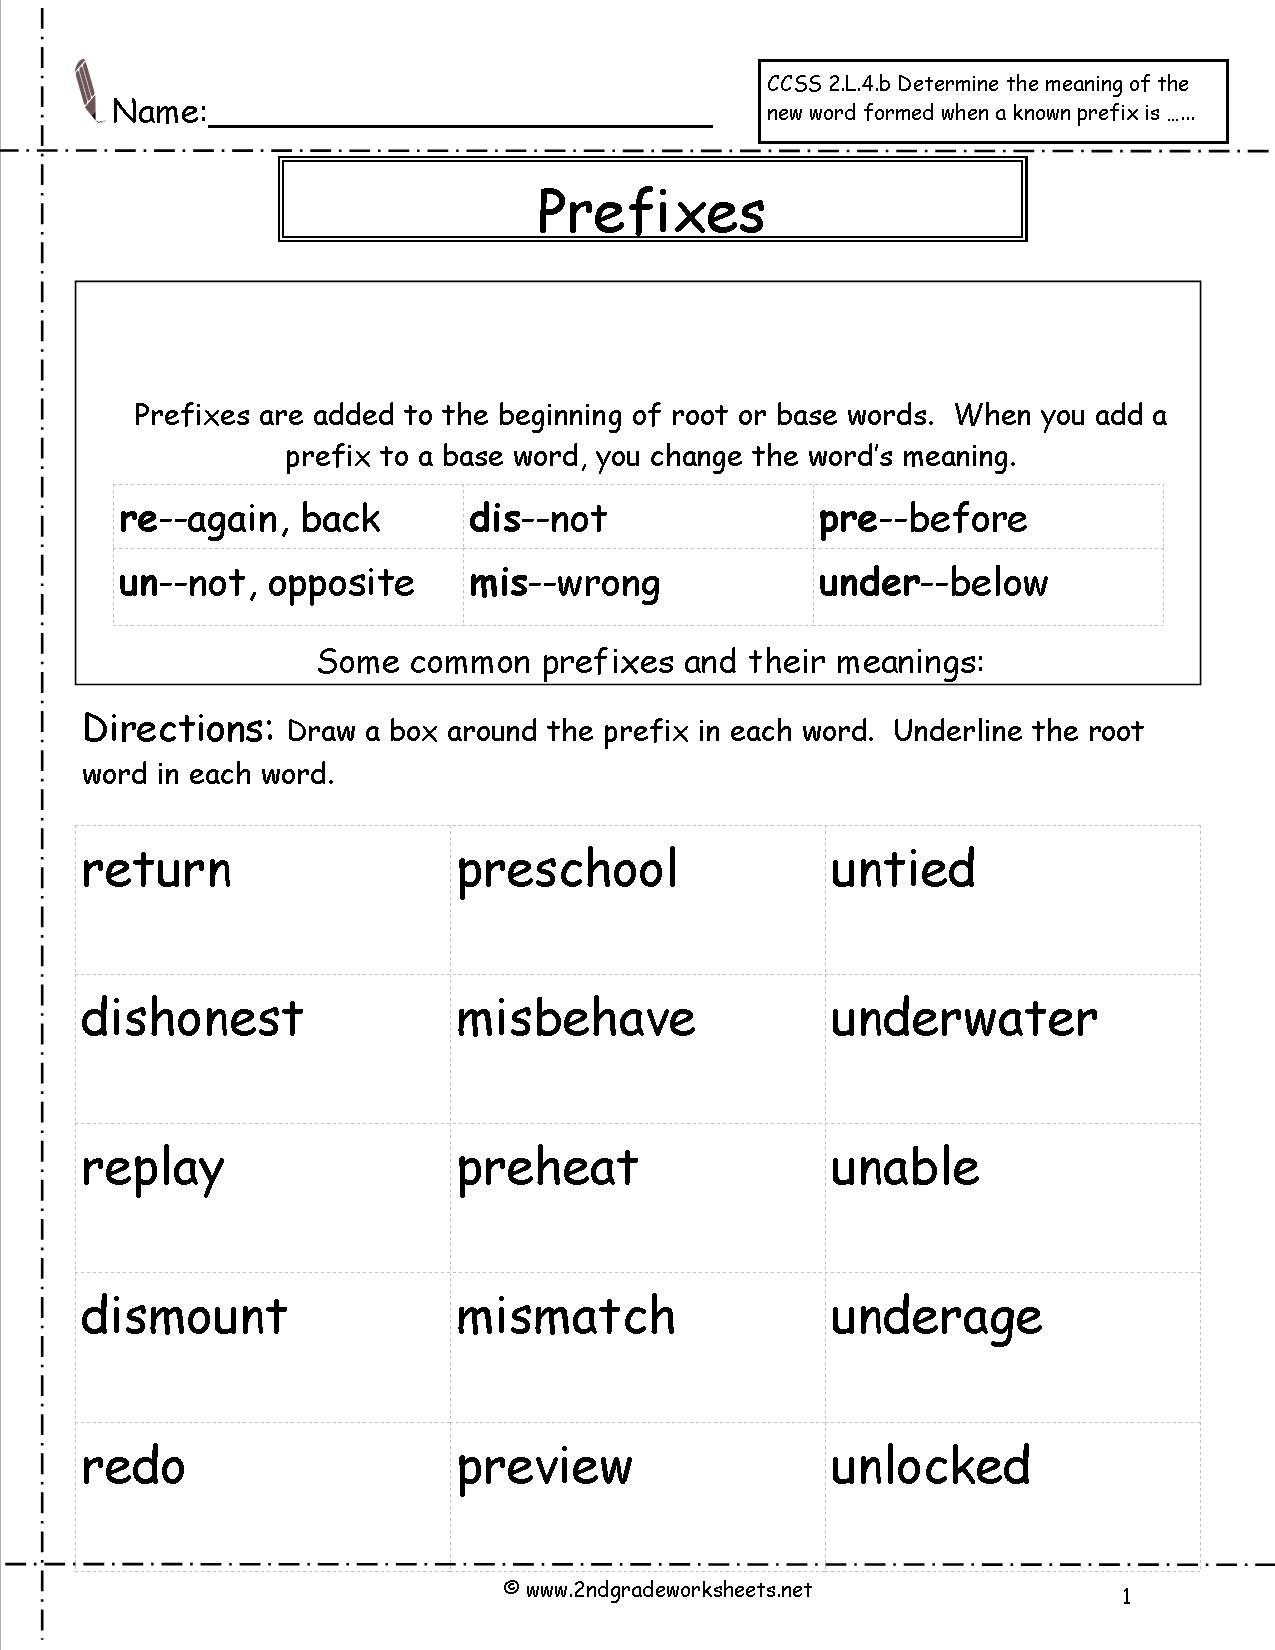 Second Grade Prefixes Worksheets Together With Prefix Worksheets 3Rd Grade